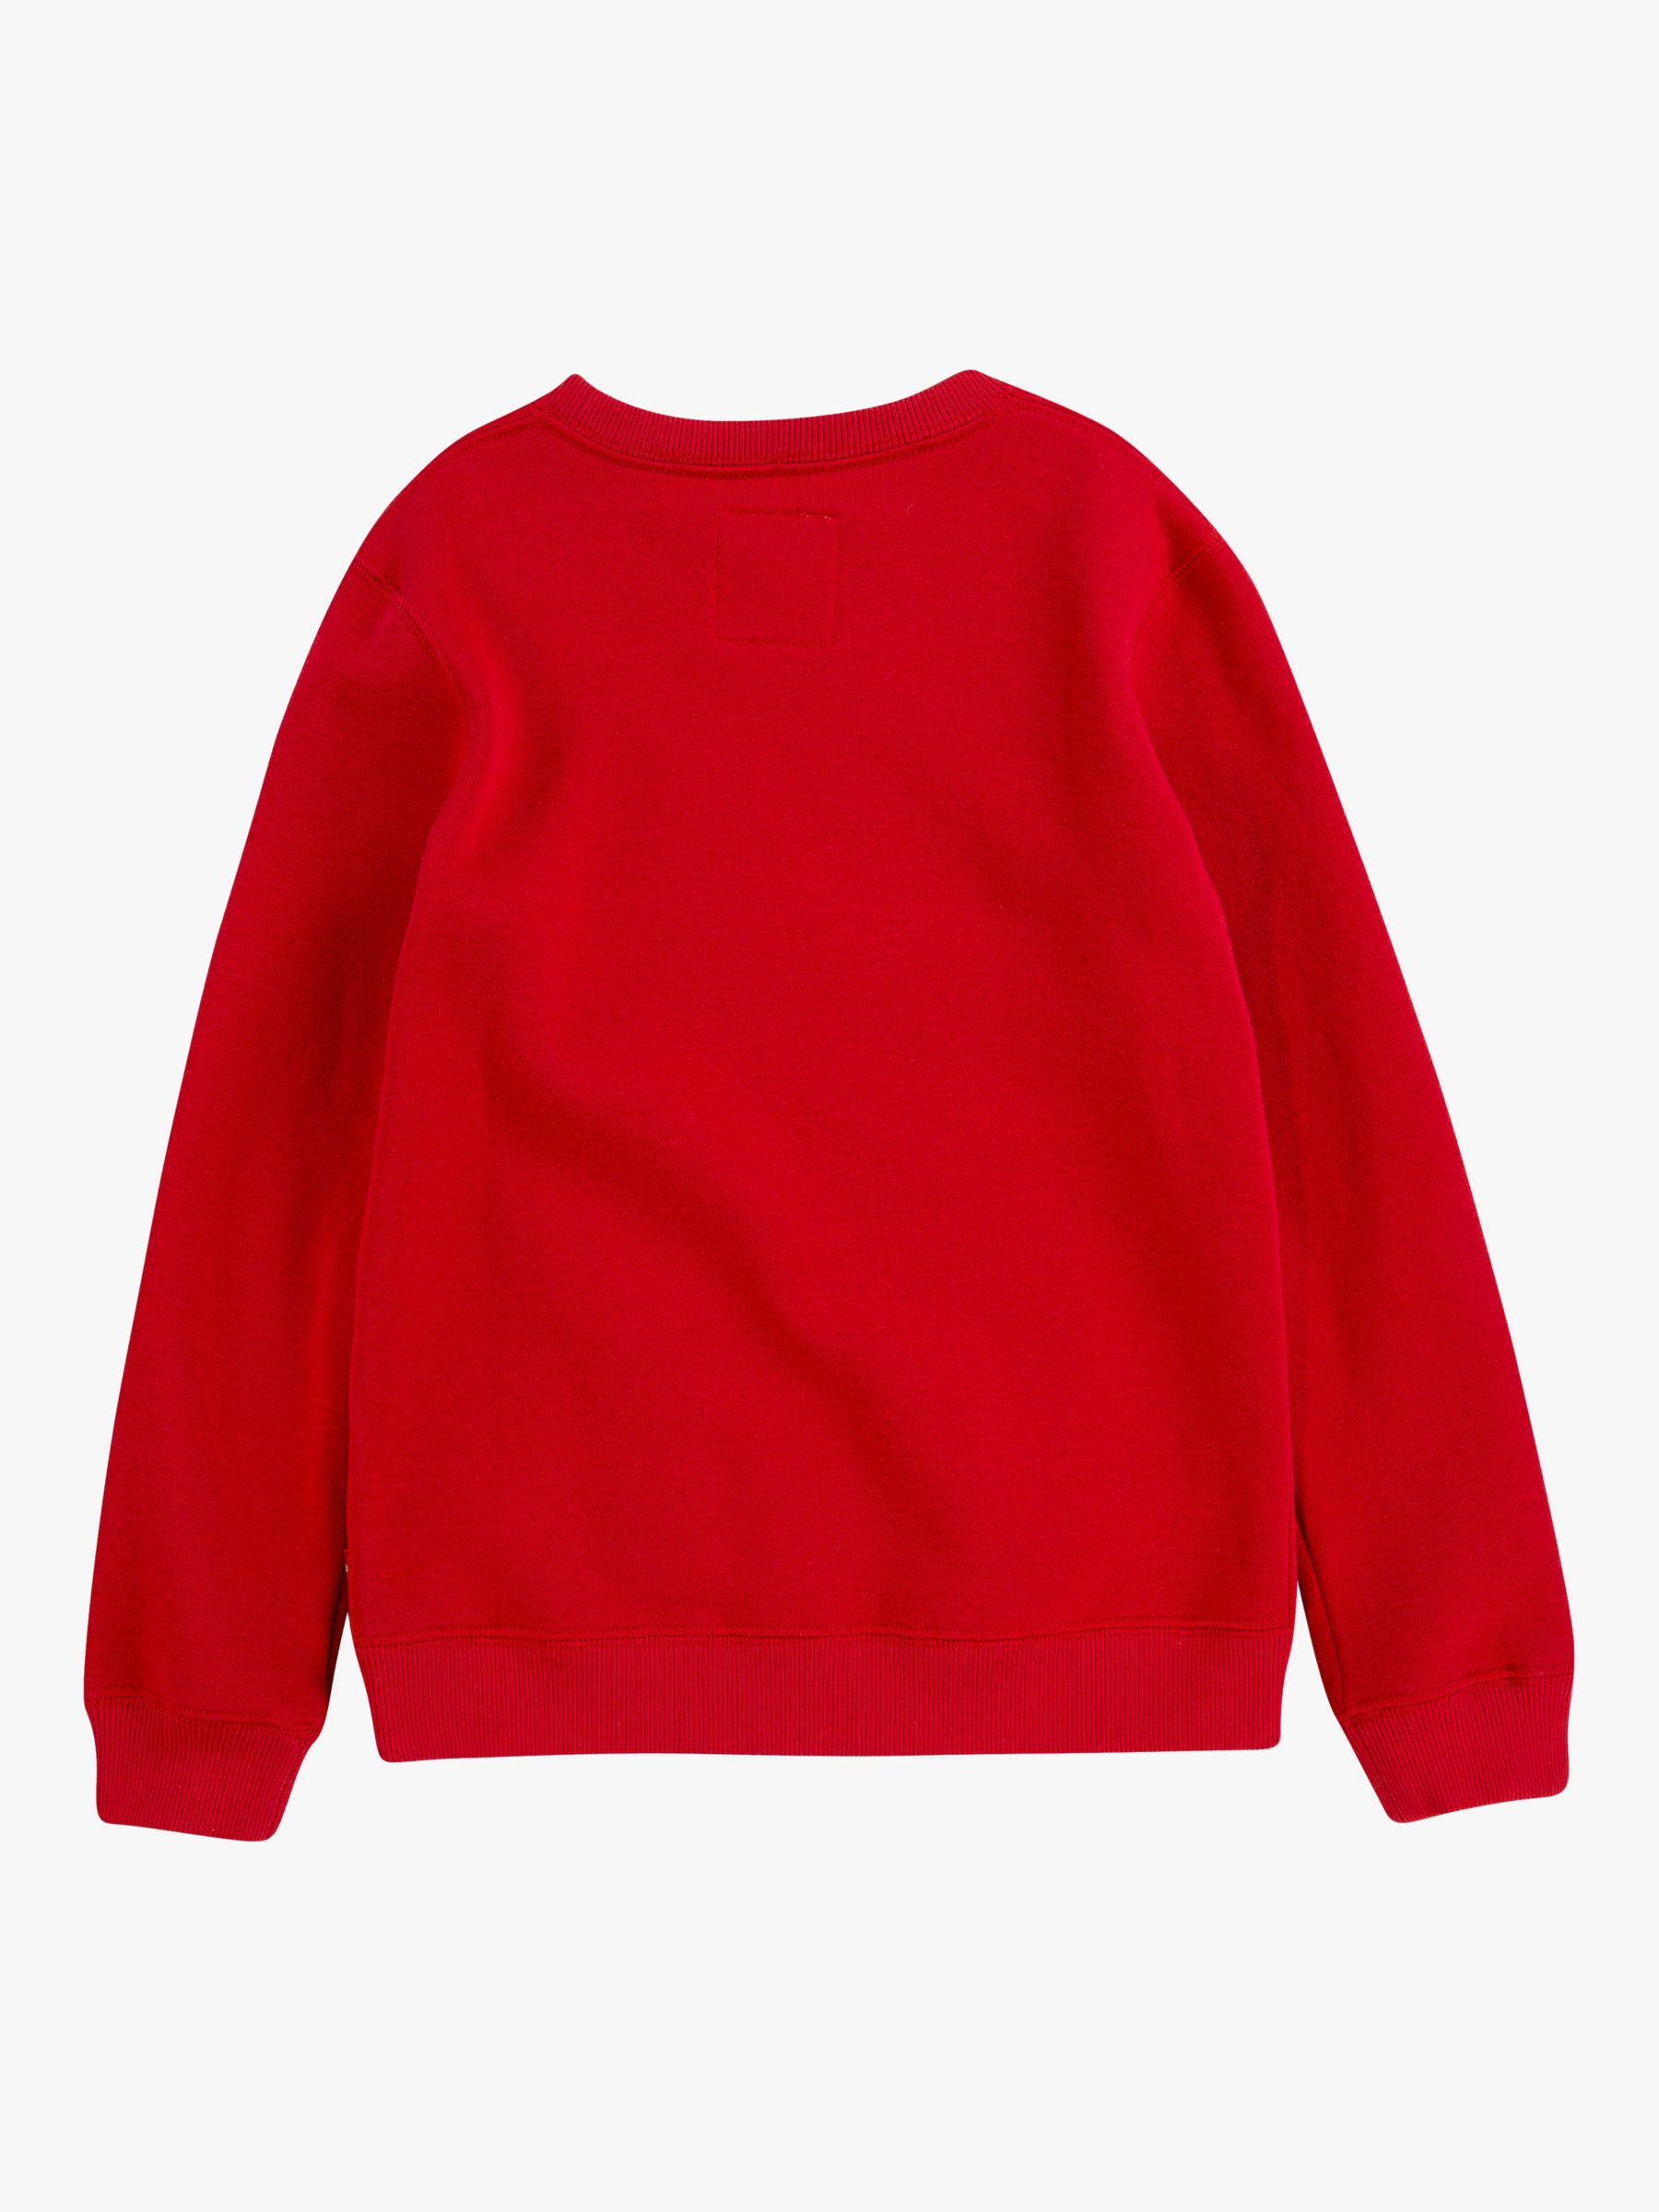 Levi's Kids' Crew Neck Batwing Logo Sweatshirt, Red, 8 years